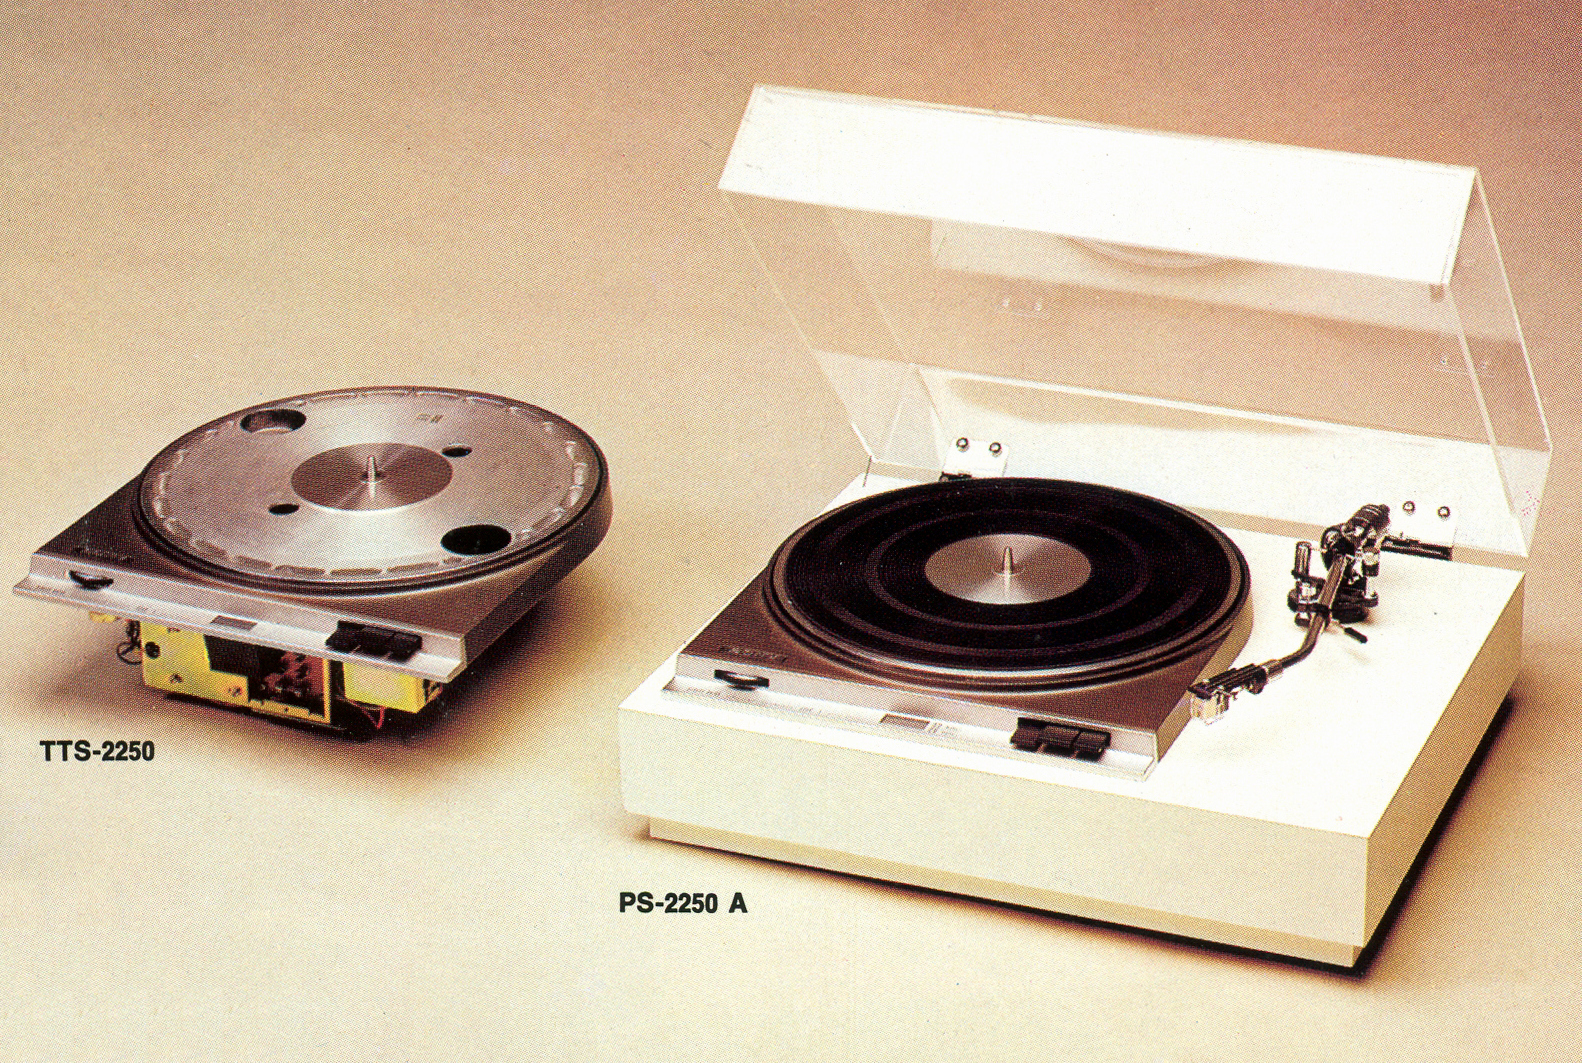 Sony PS-TTS-2250 A-Prospekt-1972.jpg